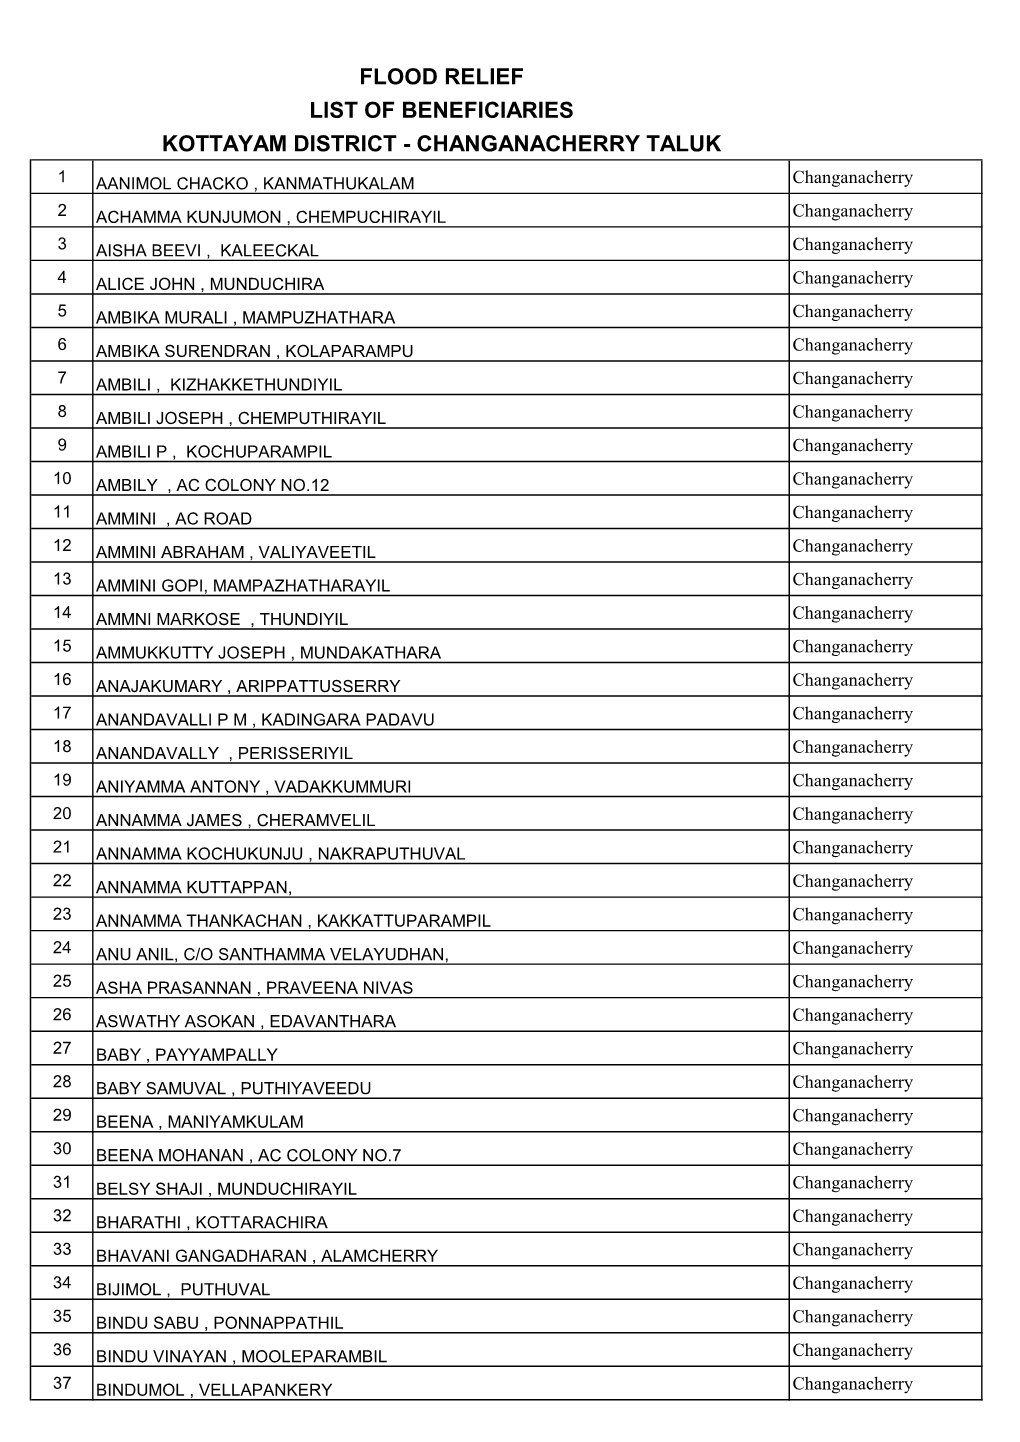 Flood Relief List of Beneficiaries Kottayam District - Changanacherry Taluk